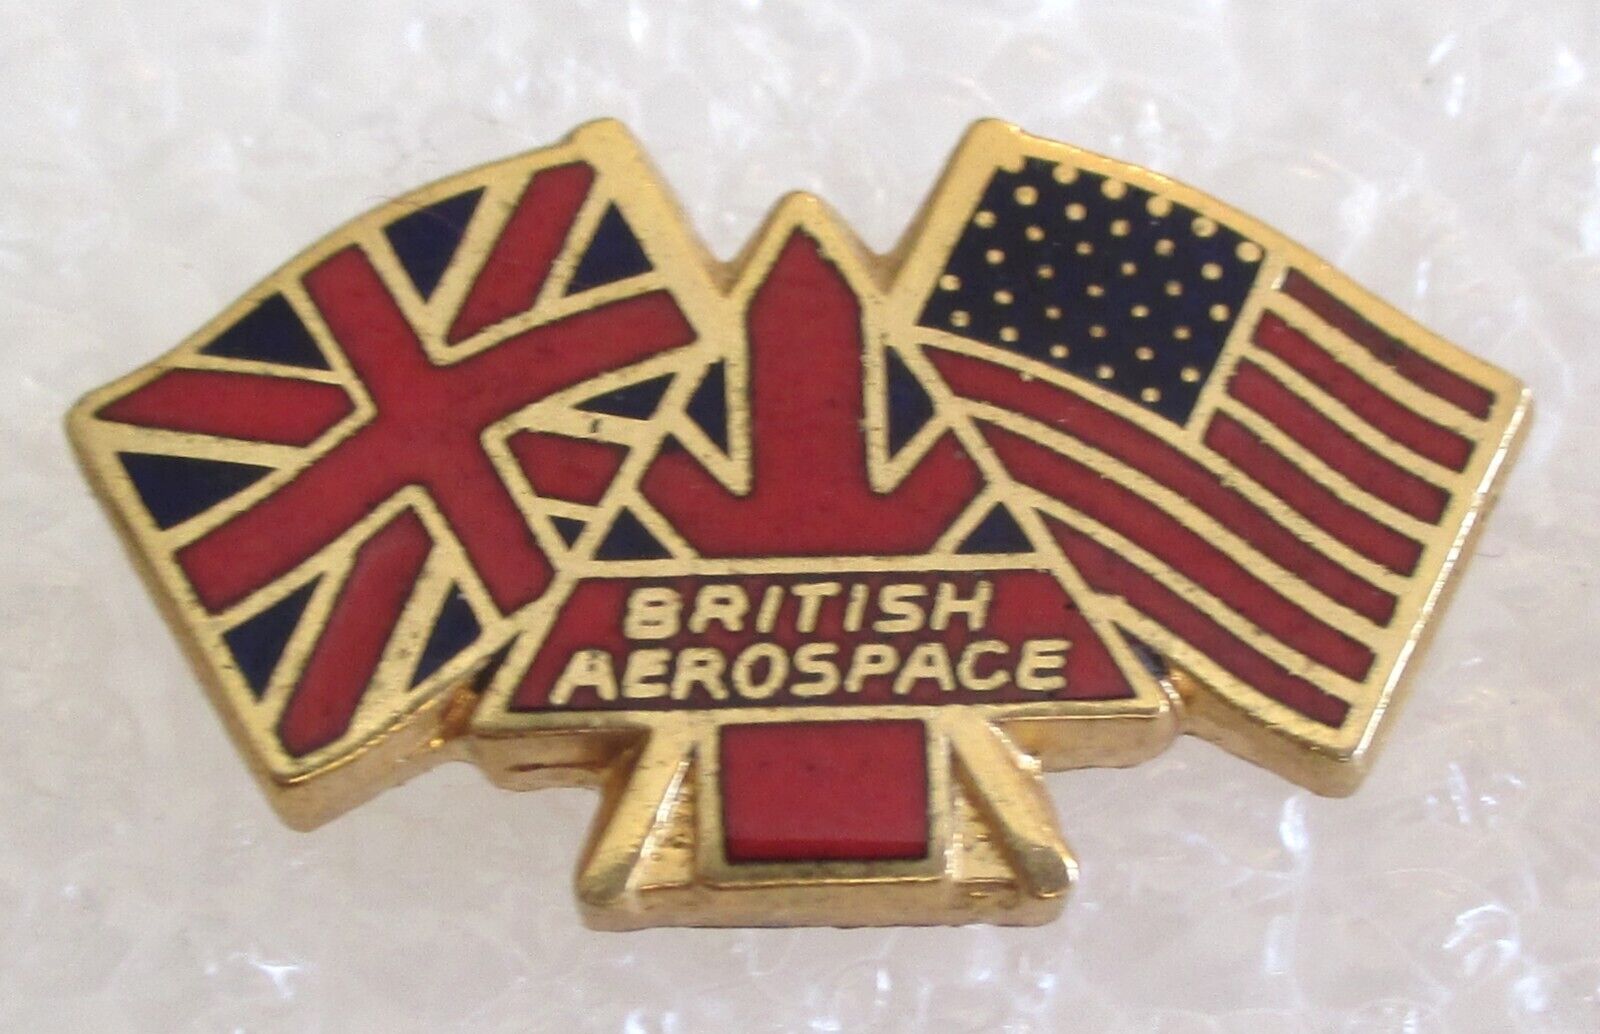 Vintage British Aerospace Company Enamel Pin